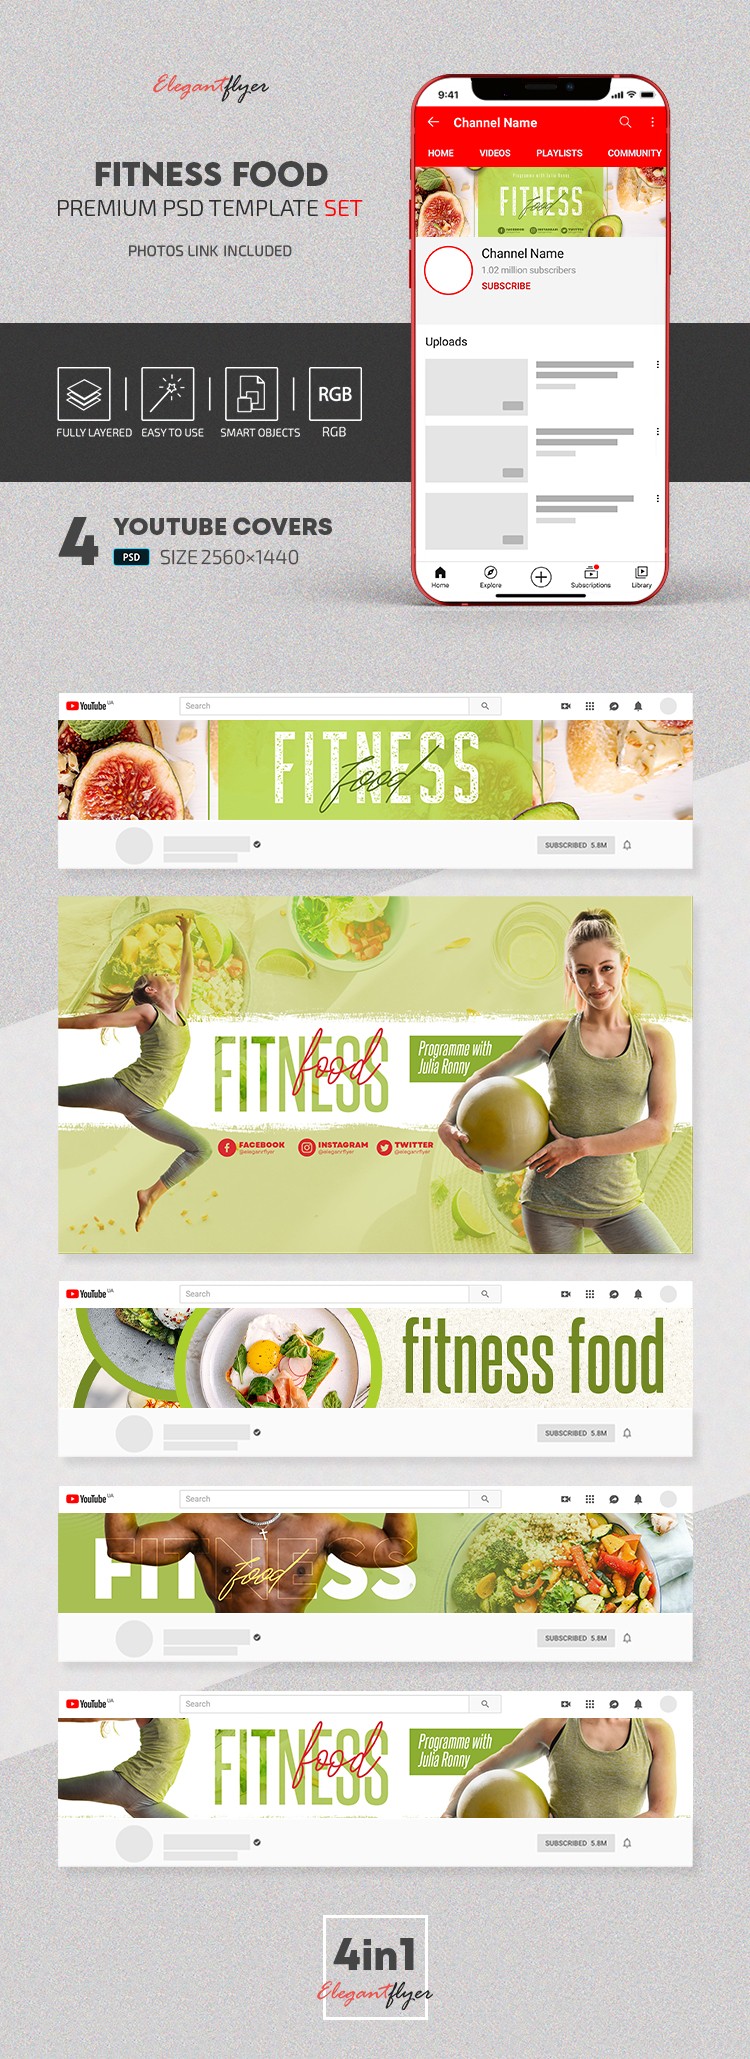 Fitness Food Youtube by ElegantFlyer